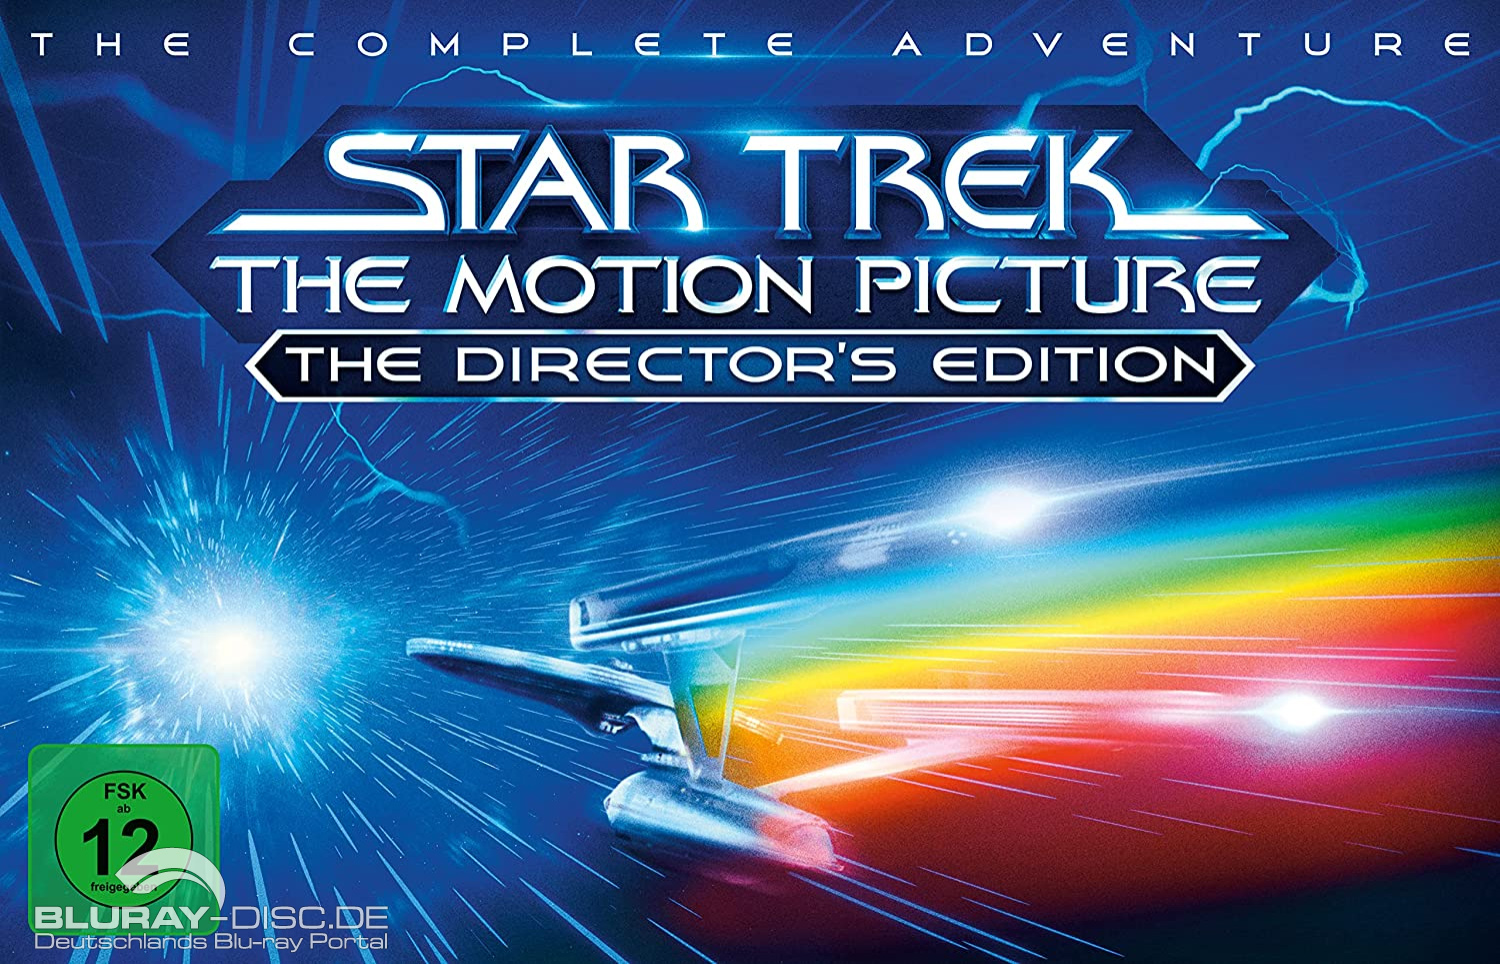 Star_Trek_Der_Film_The_Directors_Edition_The_Complete_Adventure_Galerie_05.jpg